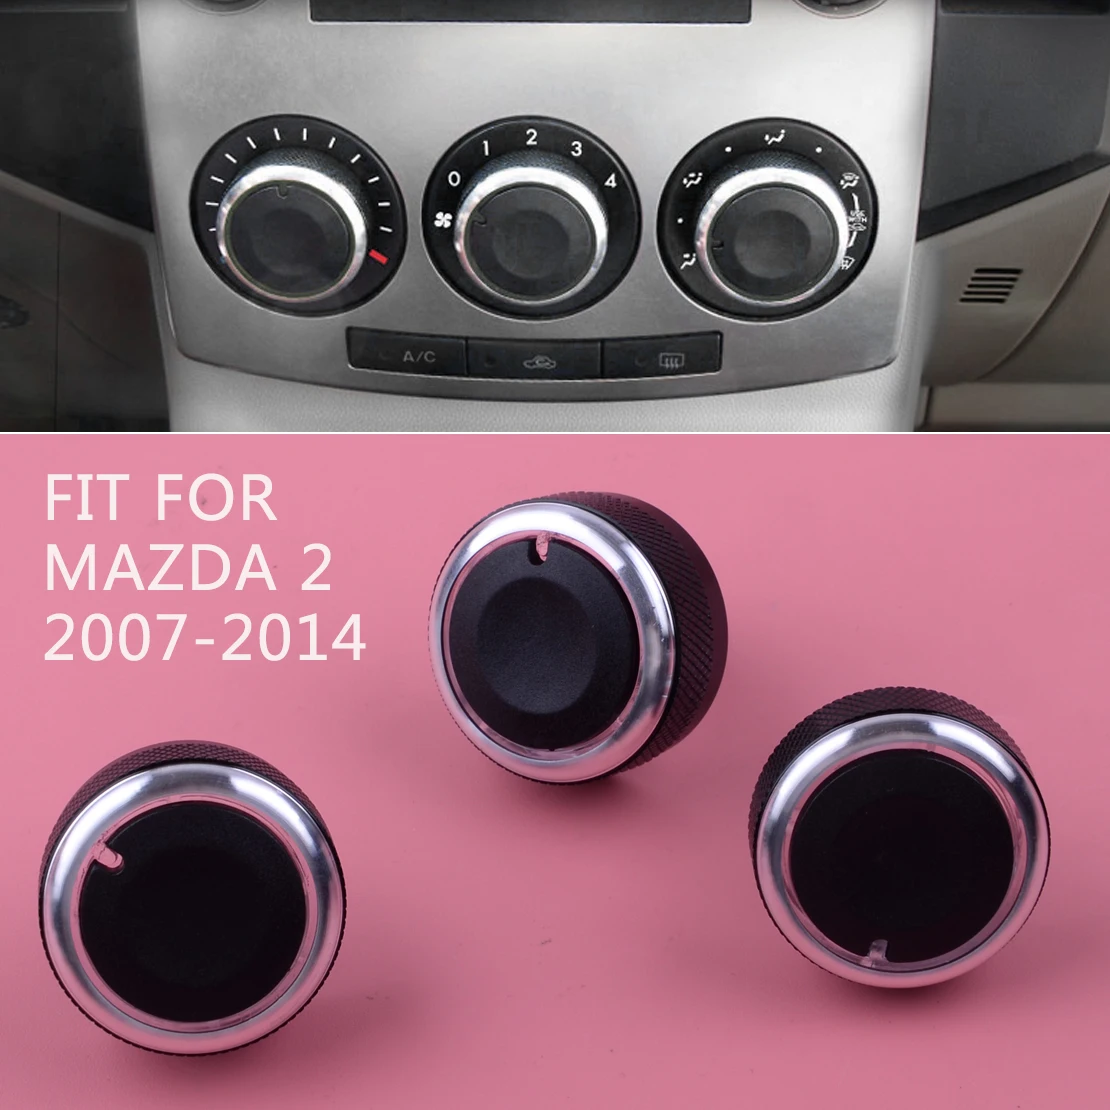 DWCX 3 шт. переключатель A/C регулятор температуры для Mazda 2 Demio 2007 2008 2009 2010 2011 2012 2013 2014 |